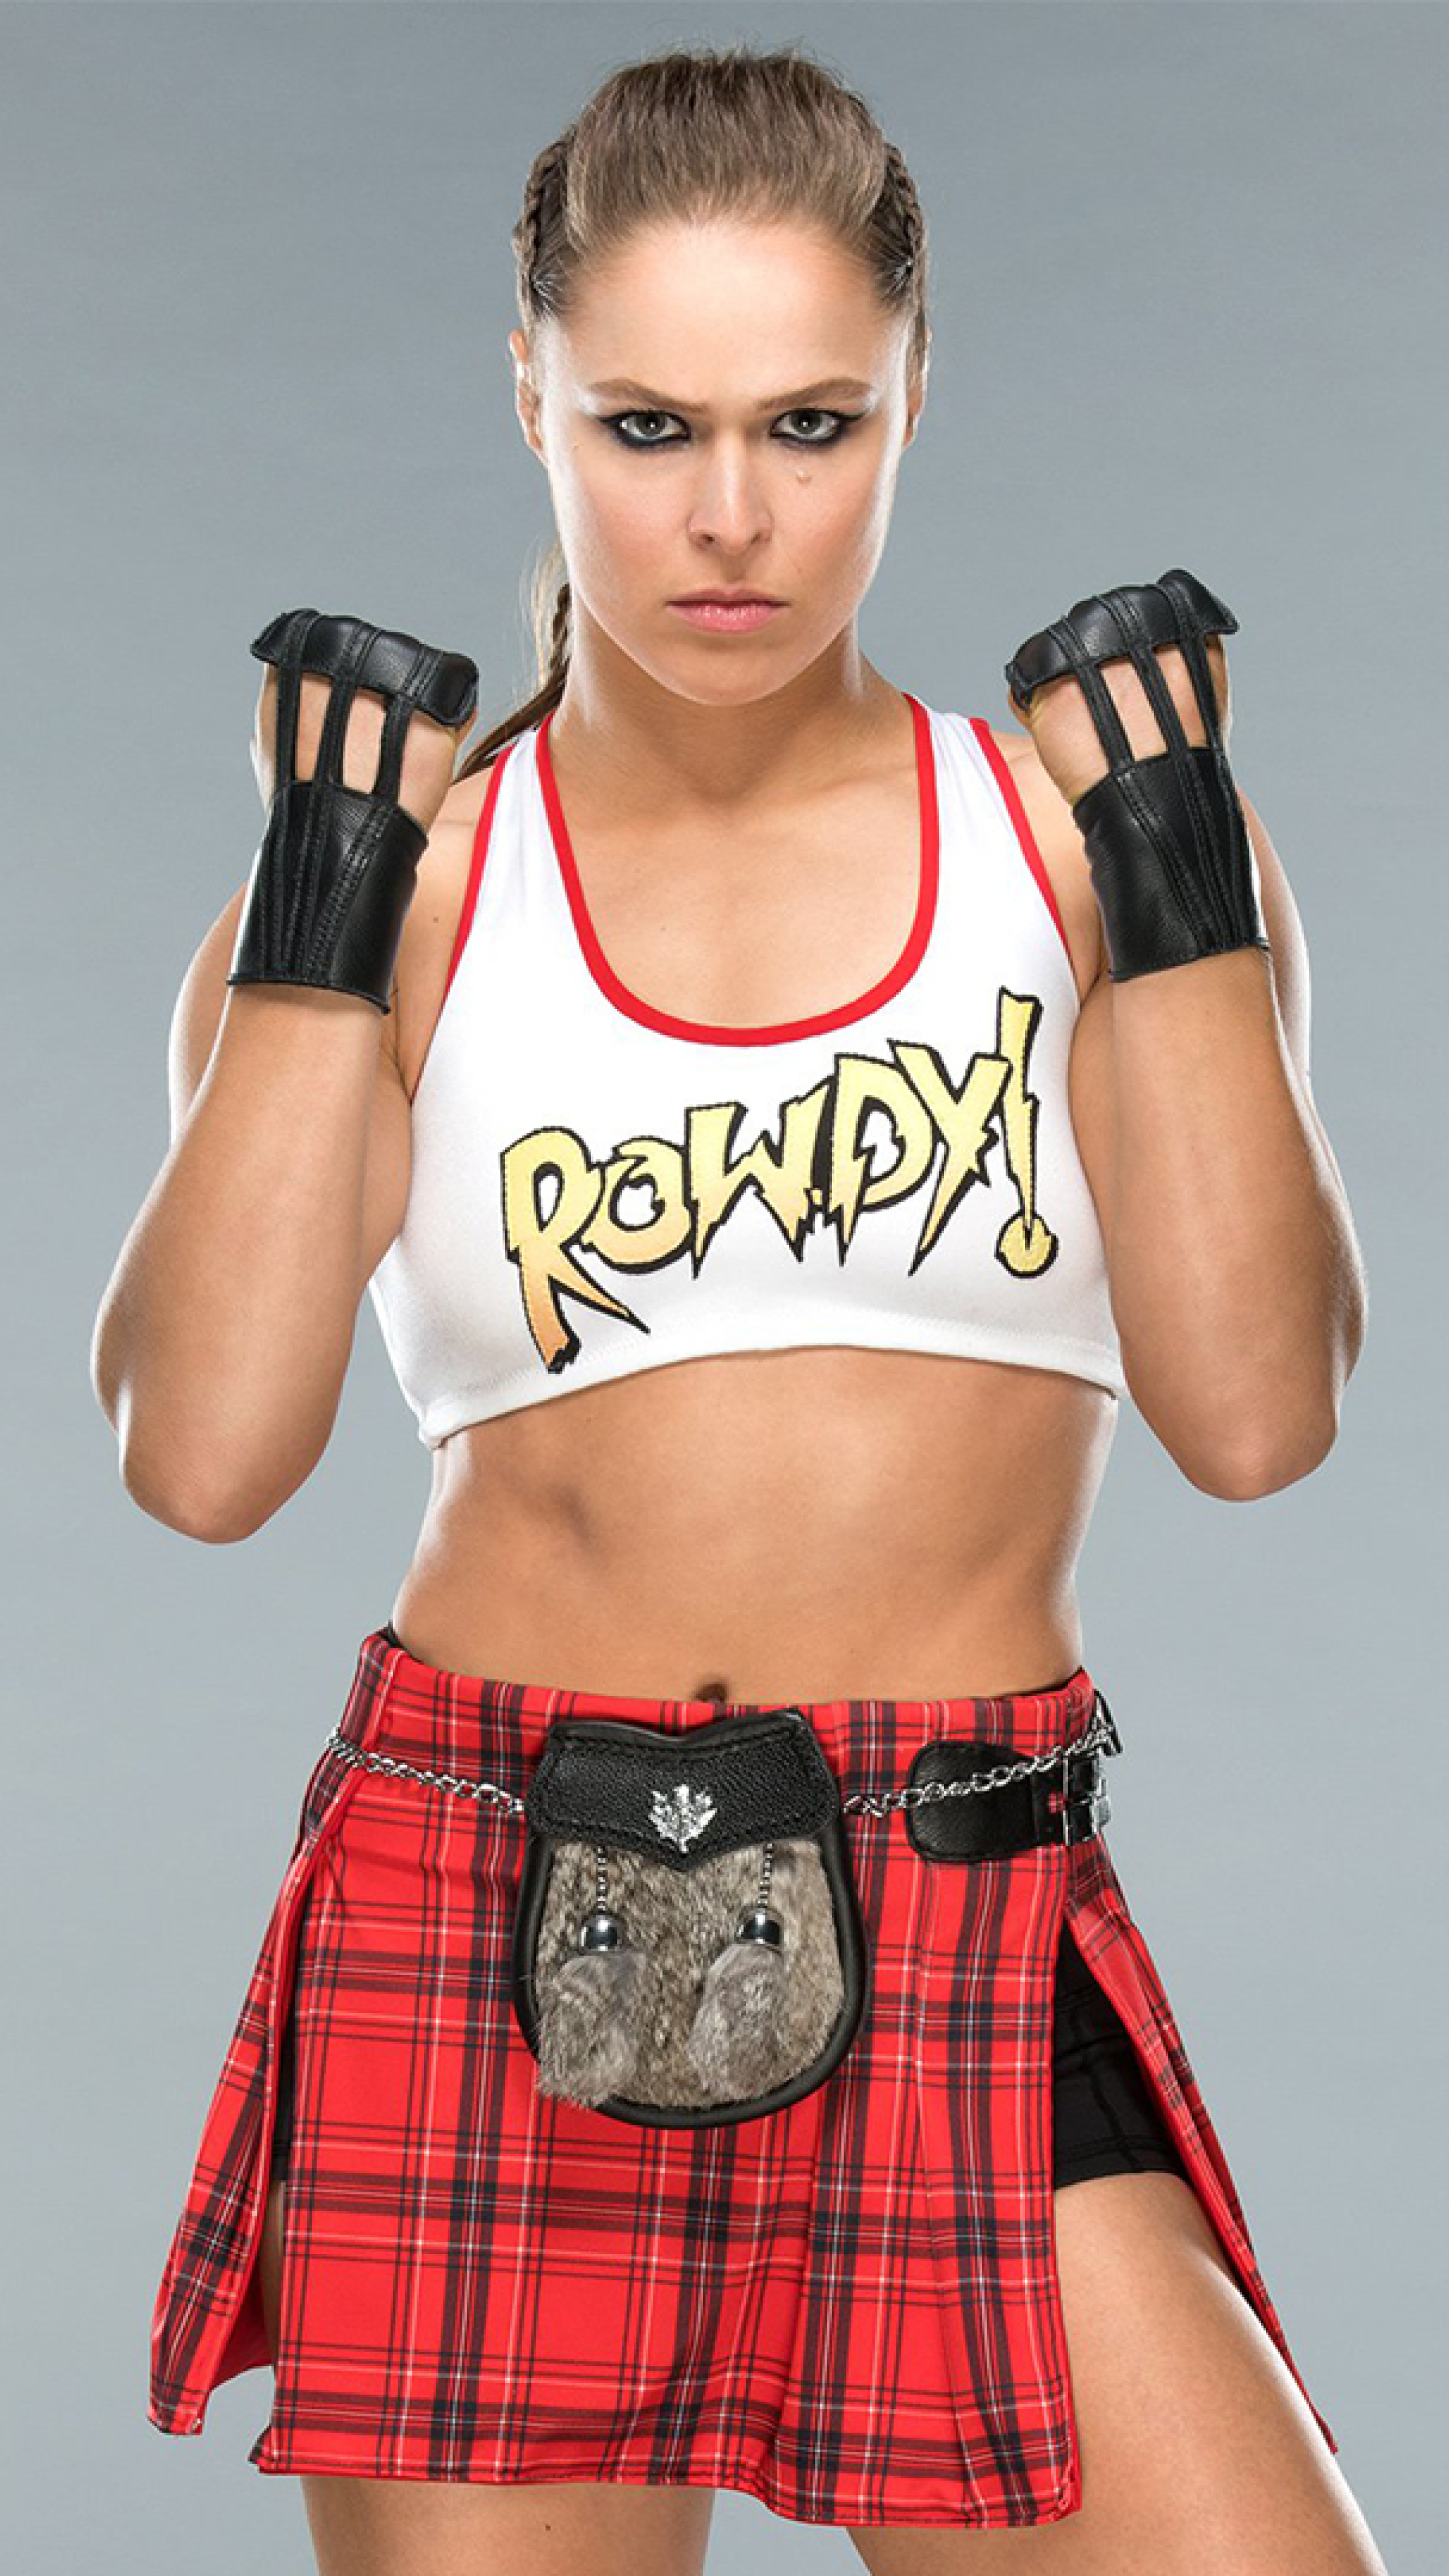 X Resolution Ronda Rousey In Wwe Ring Gear Sony Xperia X Xz Z Premium Wallpaper